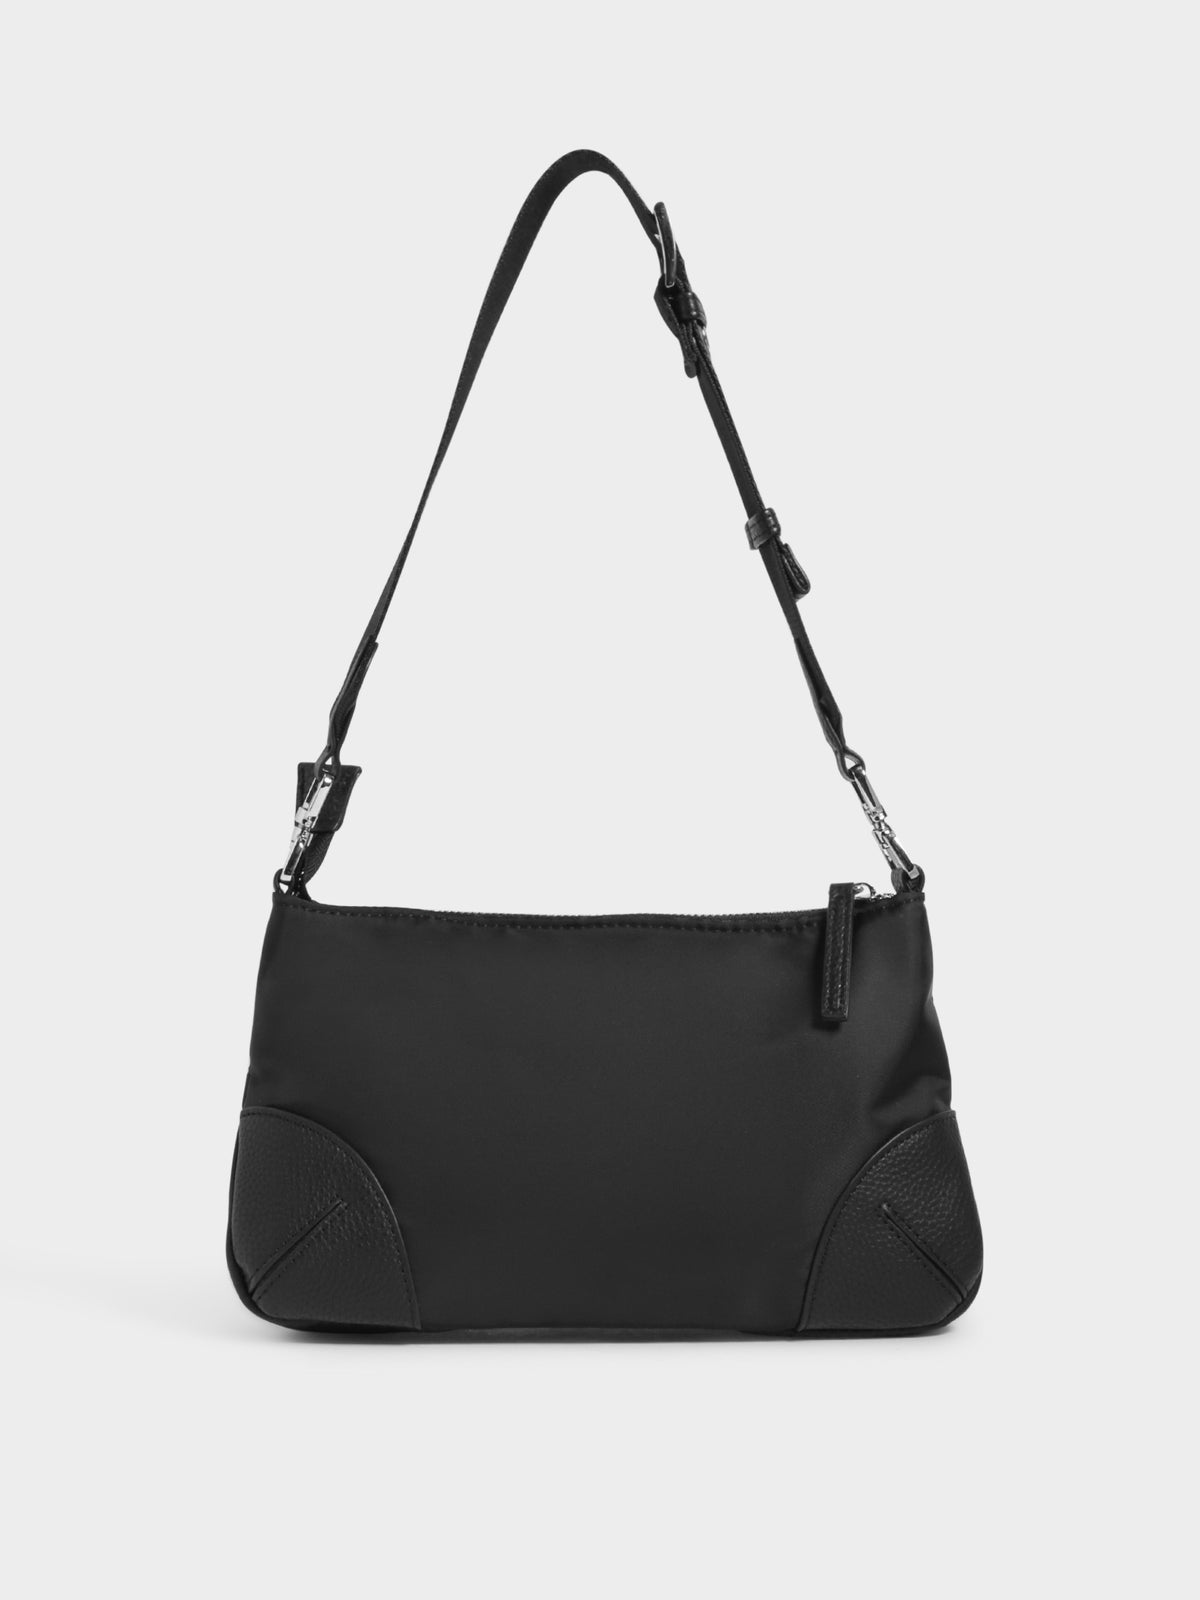 Princeton Bag in Black